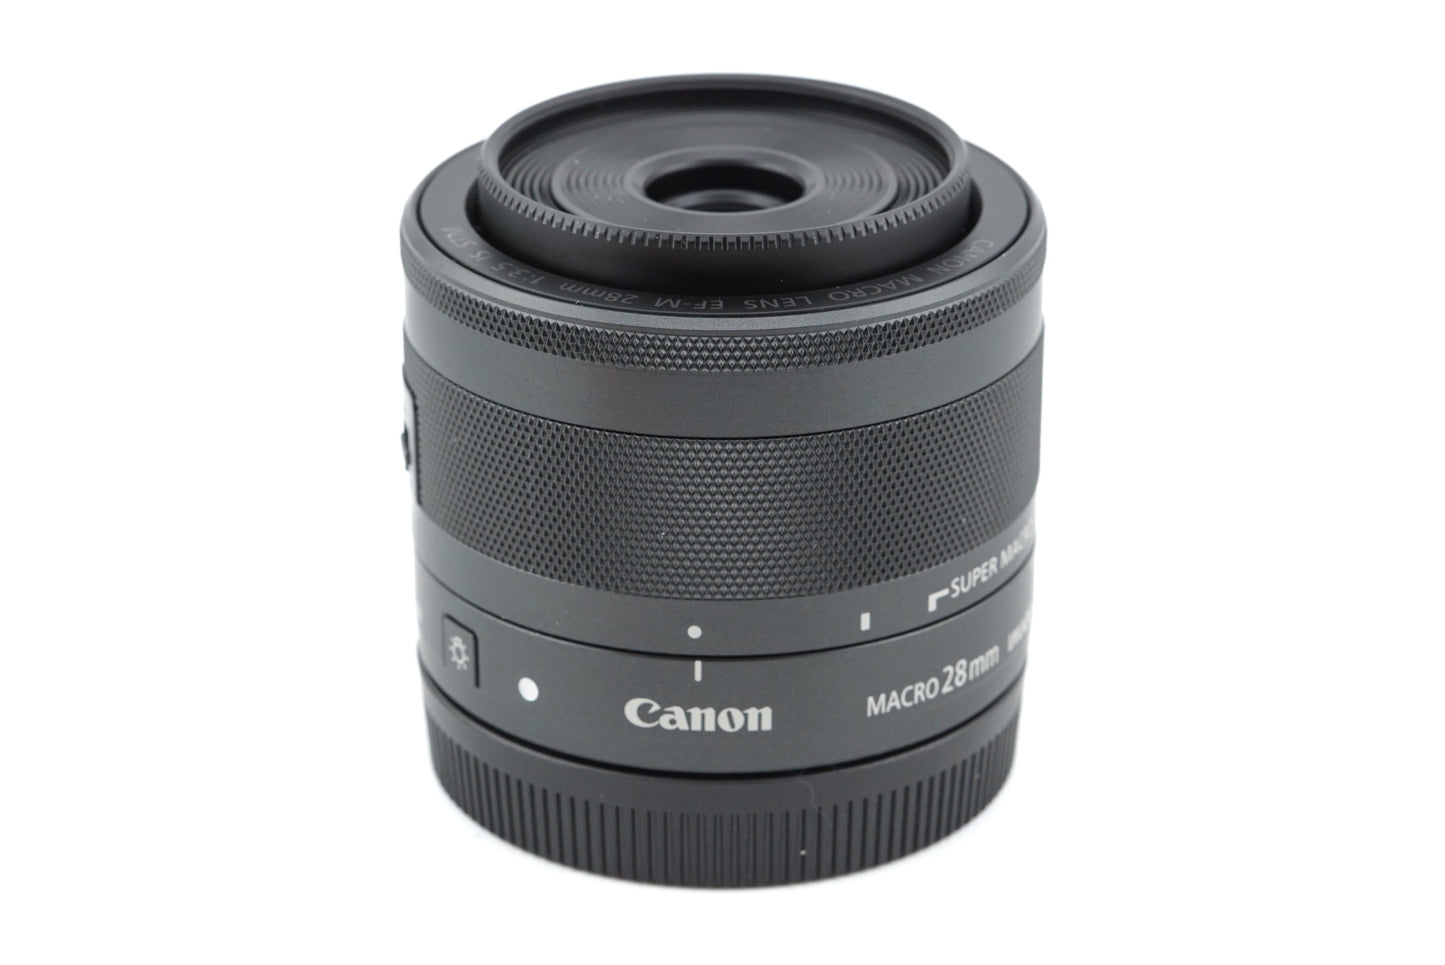 Canon 28mm f3.5 Macro IS STM - Lens